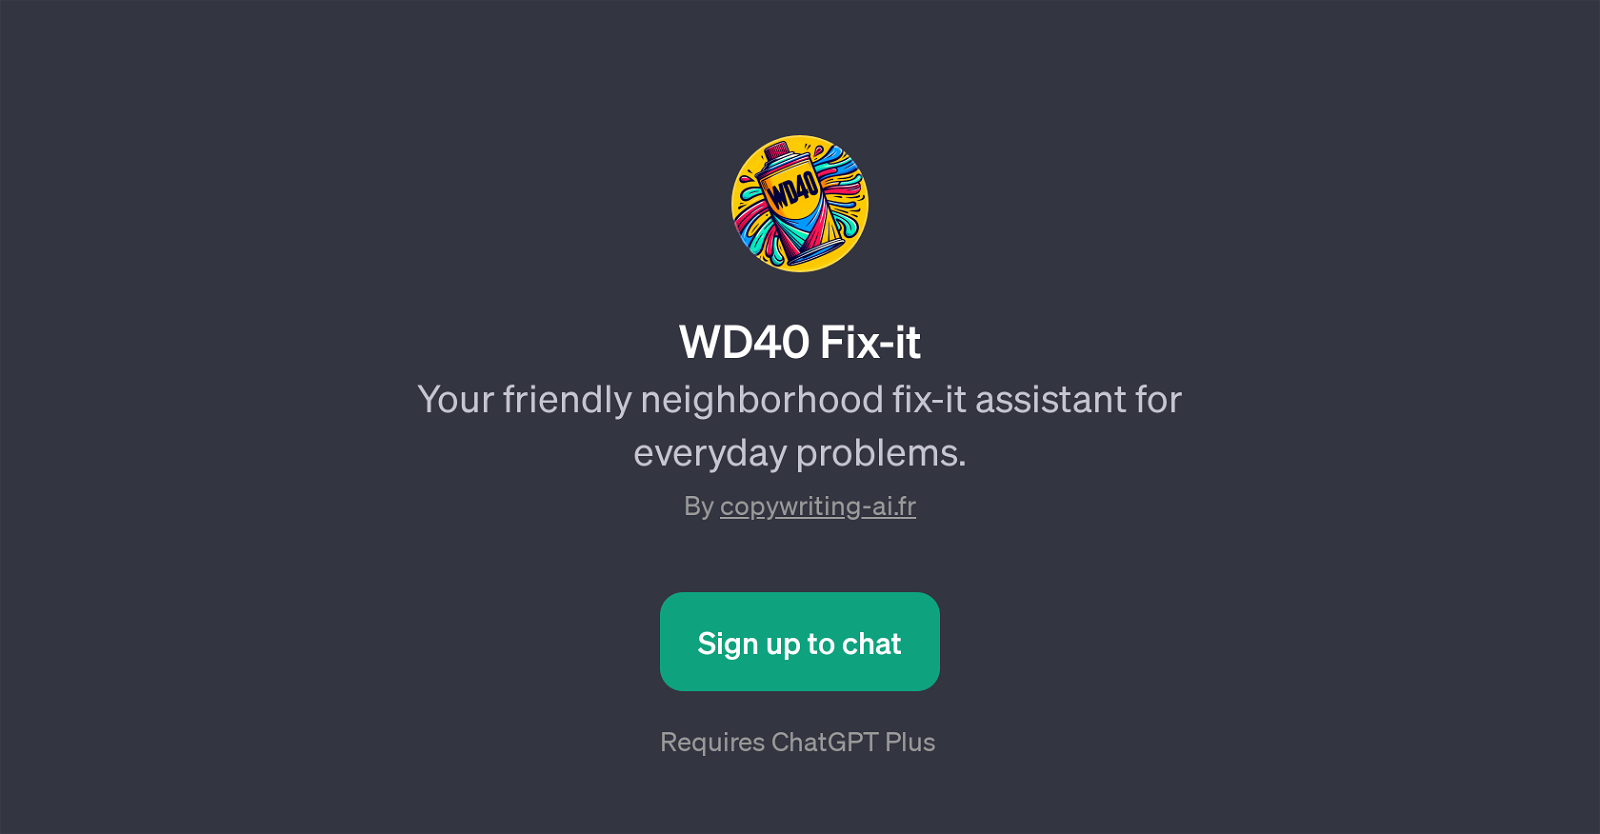 WD40 Fix-it website